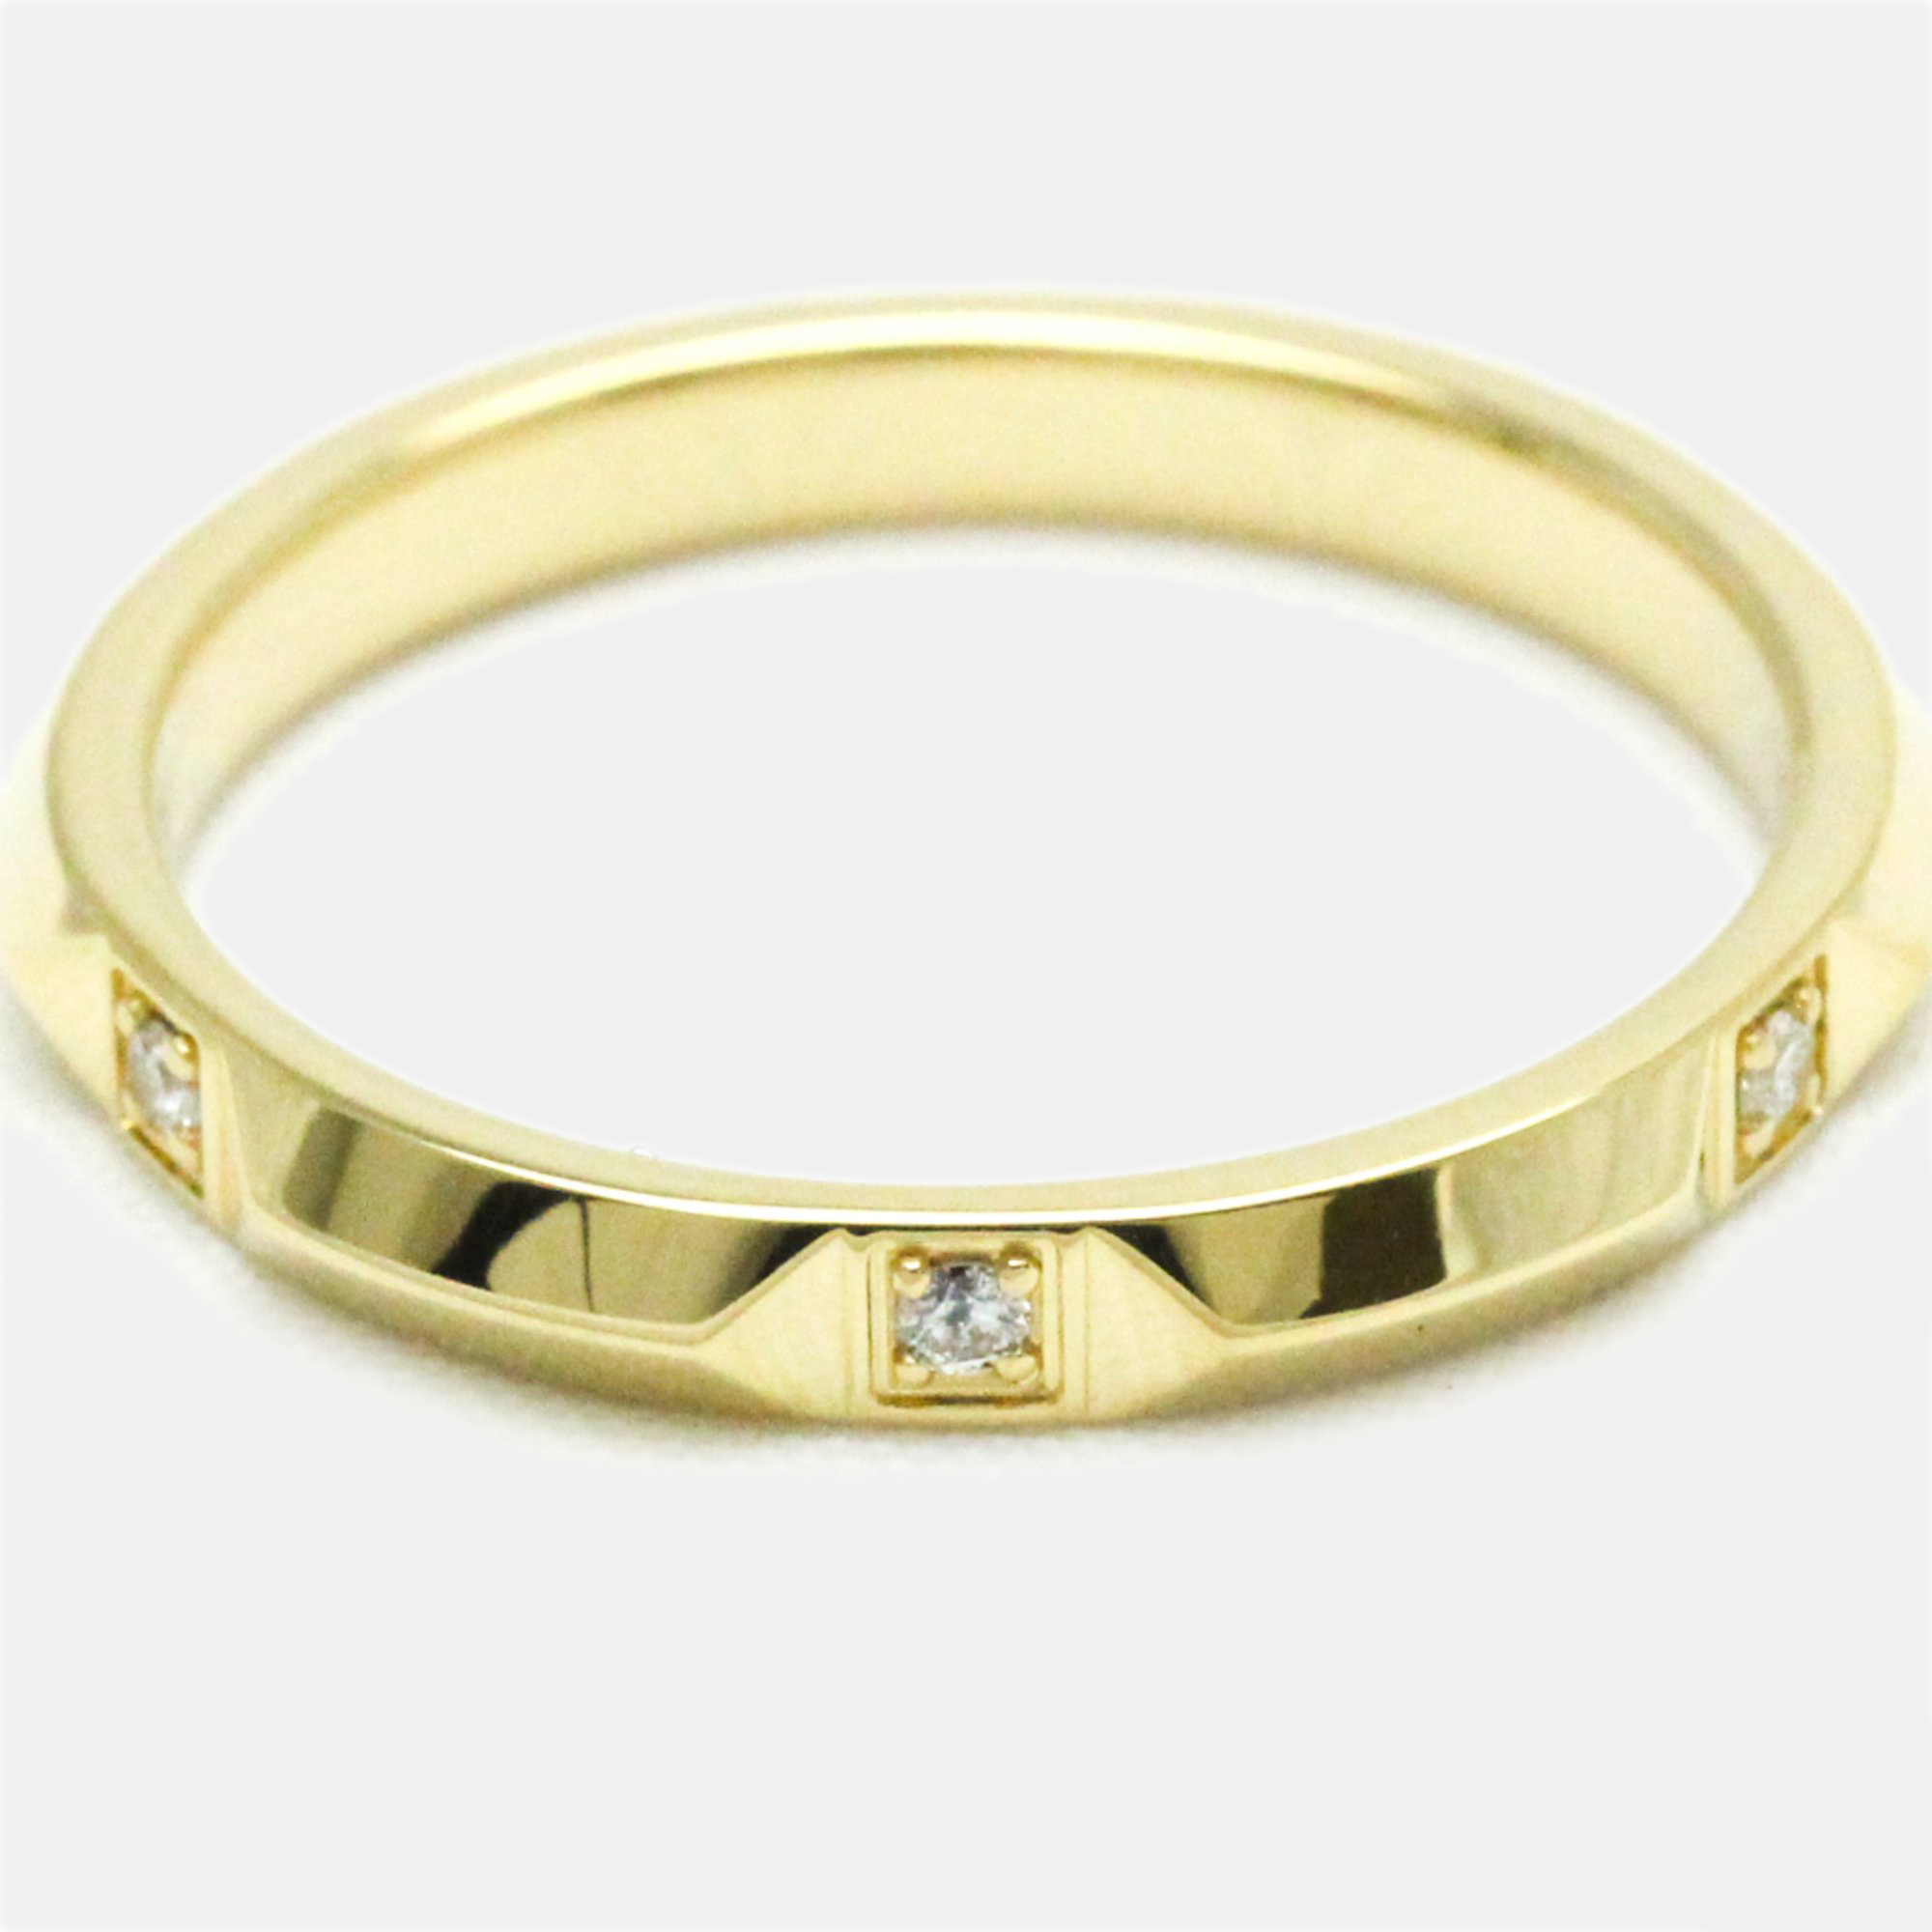 Tiffany & Co. True 18K Yellow Gold Diamond Ring EU 57